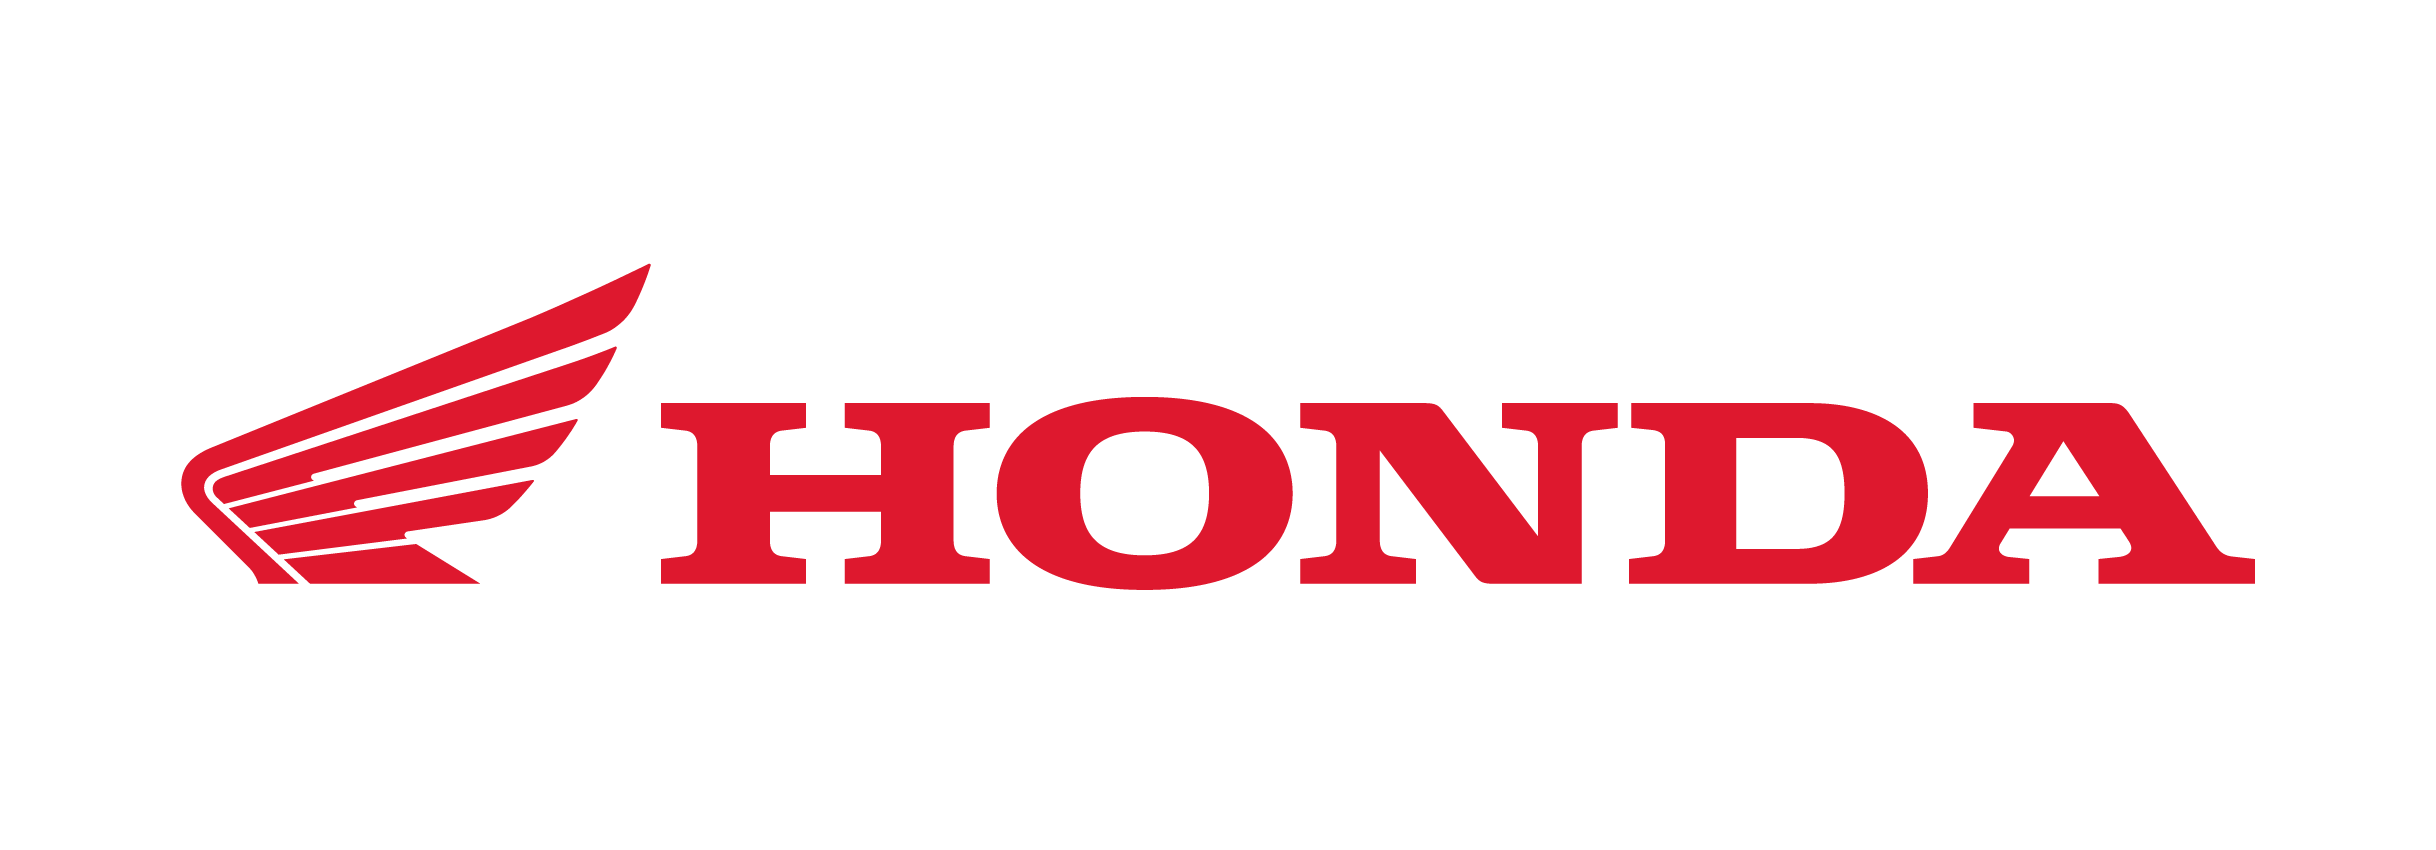 Honda Motocross Logo - honda logo | carToon | Honda logo, Logos, Motorcycle decals